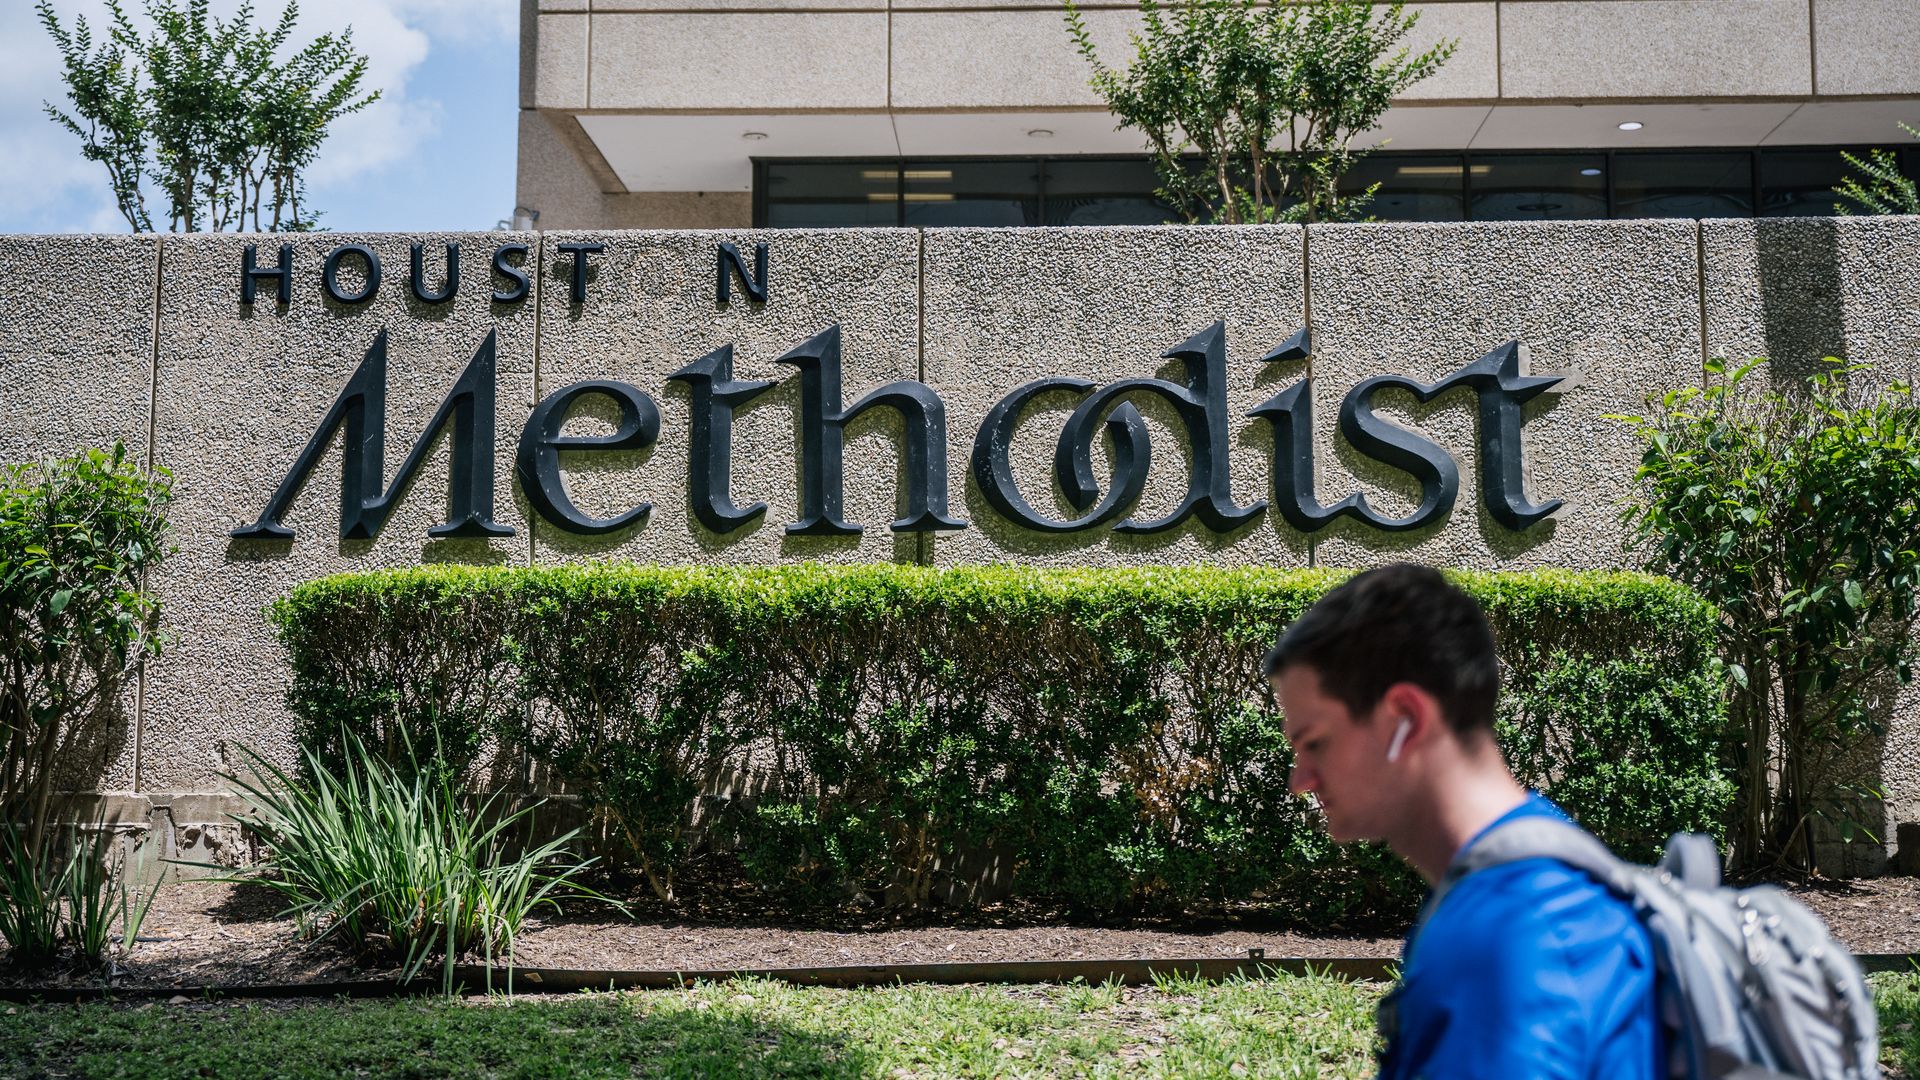 A man walks past the Houston Methodist Hospital on June 09, 2021 in Houston, Texas.